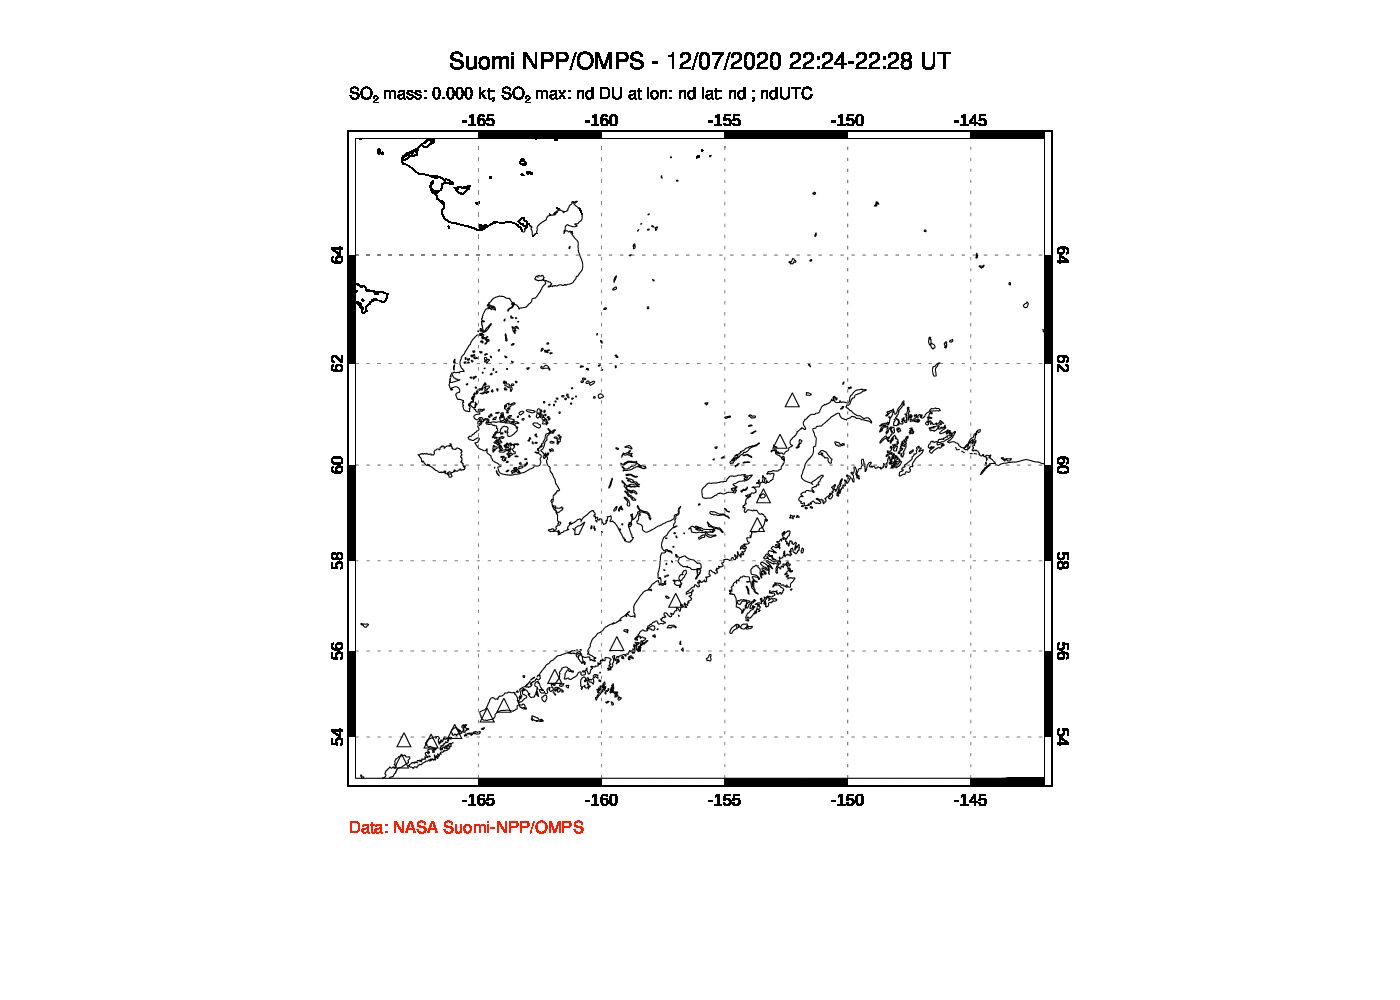 A sulfur dioxide image over Alaska, USA on Dec 07, 2020.